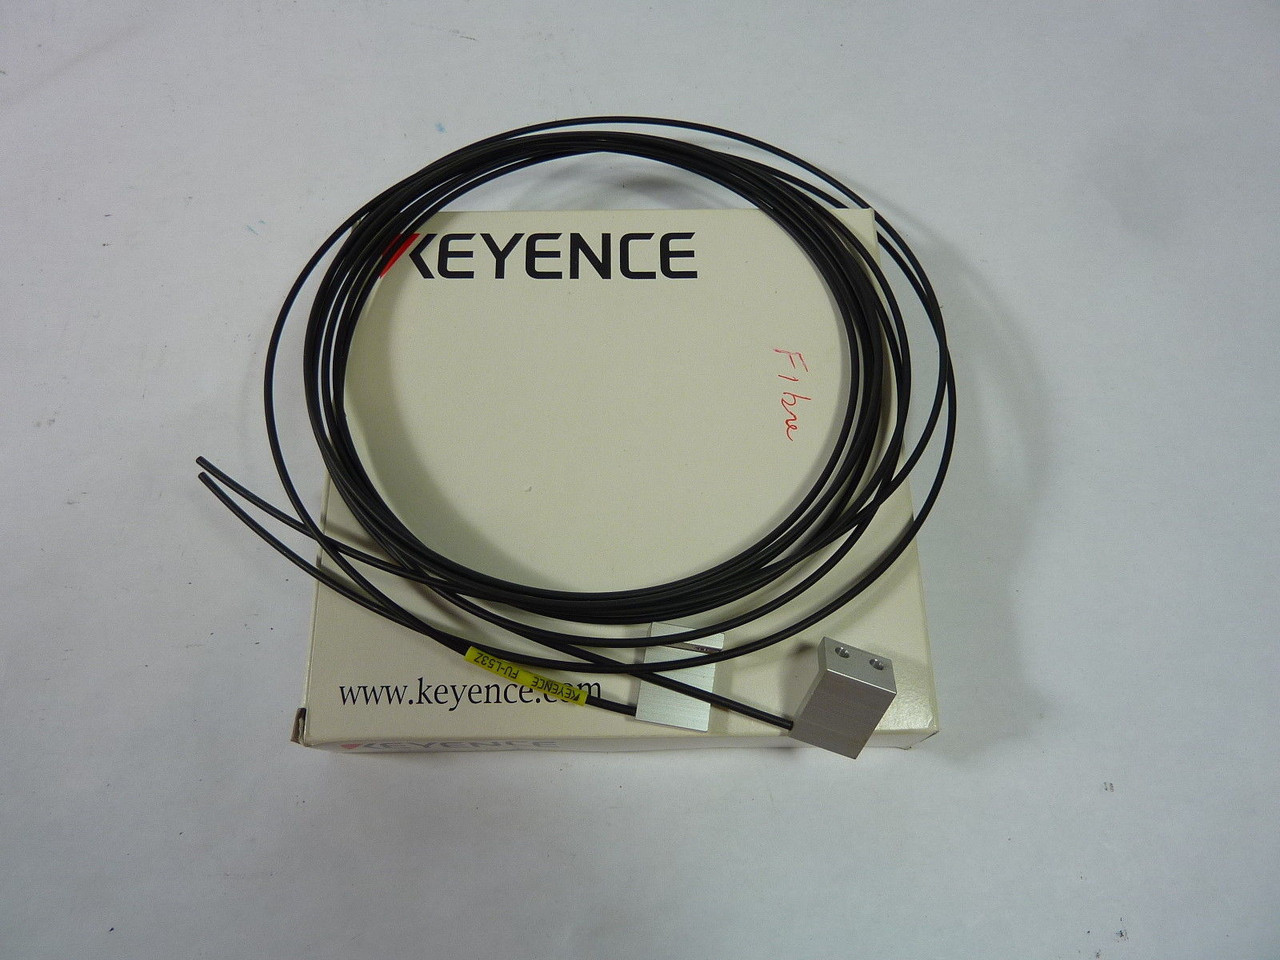 Keyence FU-L53Z Fiber Optic Sensor ! NEW !